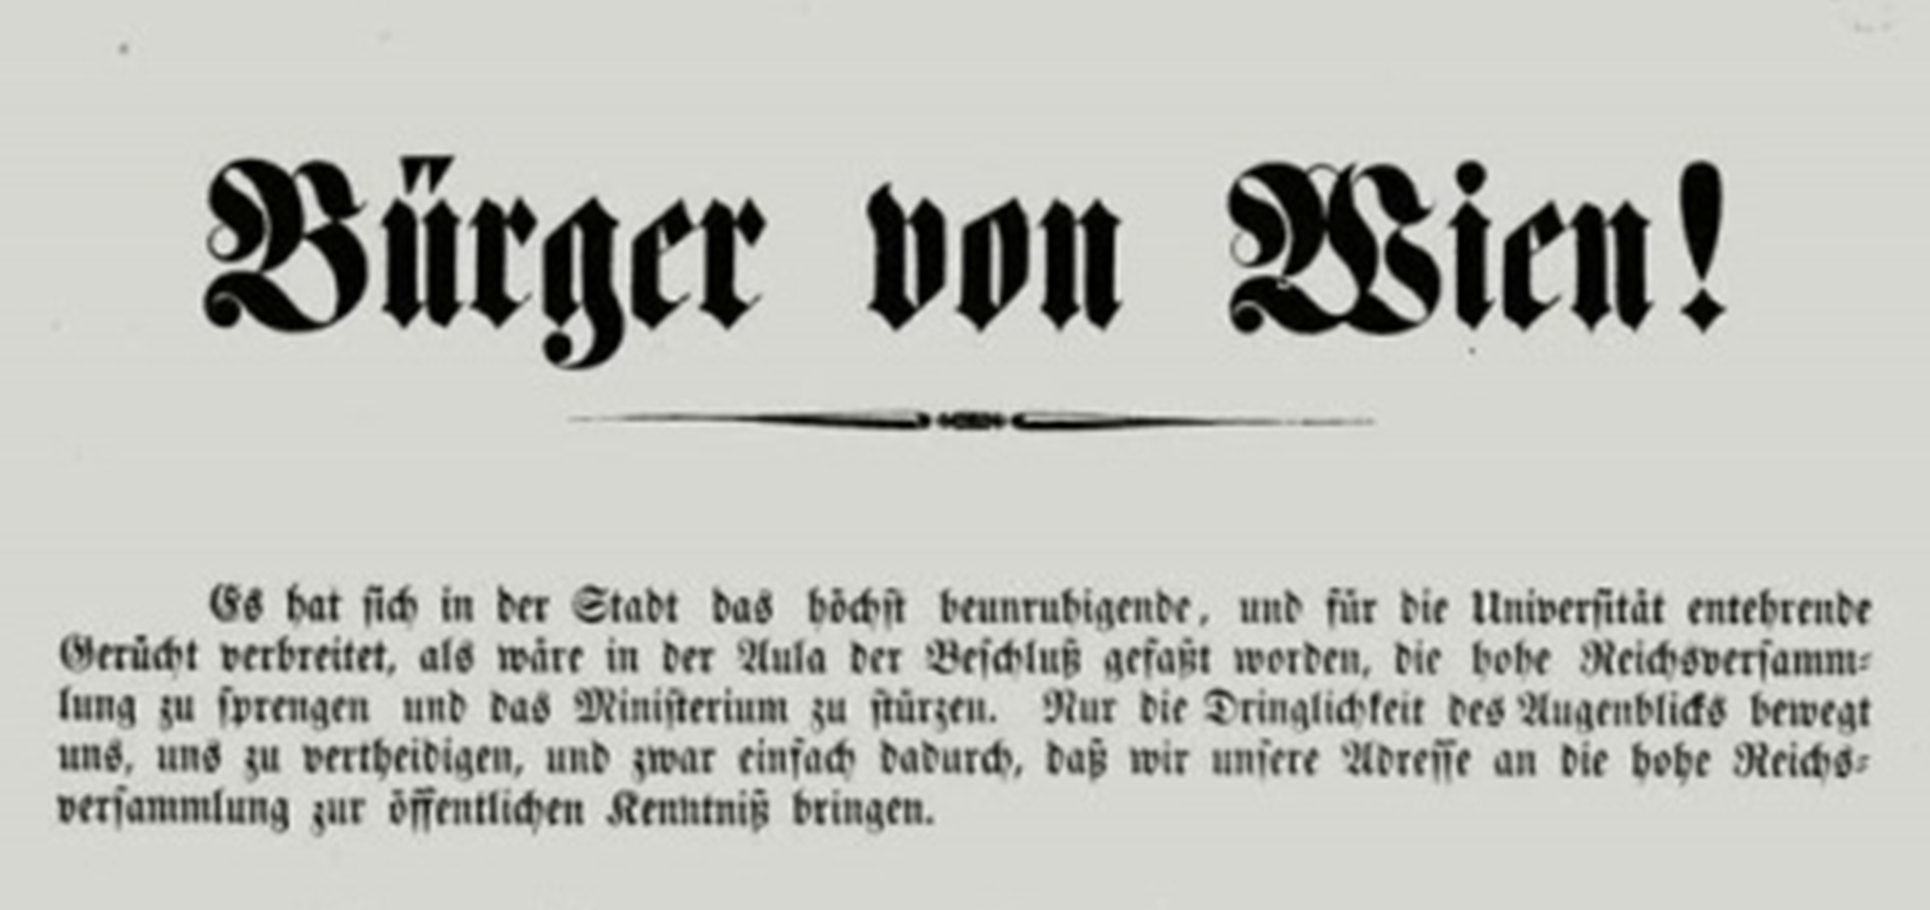 Flugblatt "Bürger von Wien!"